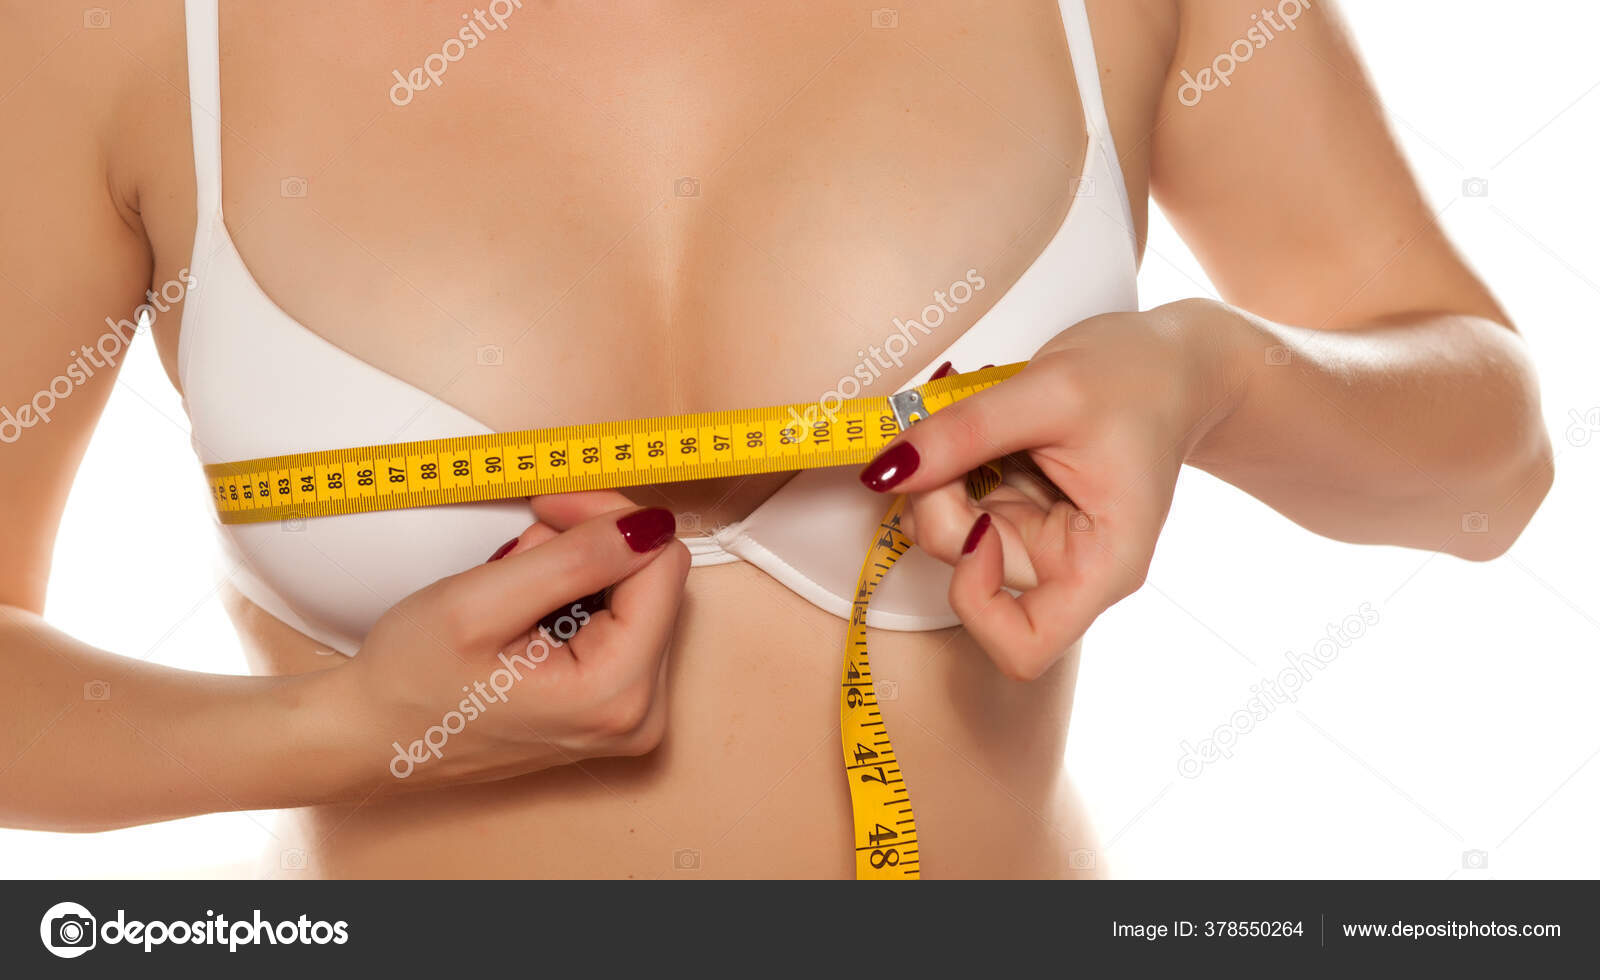 Woman Taking Her Bra Measurements Stock Photo 1038746869